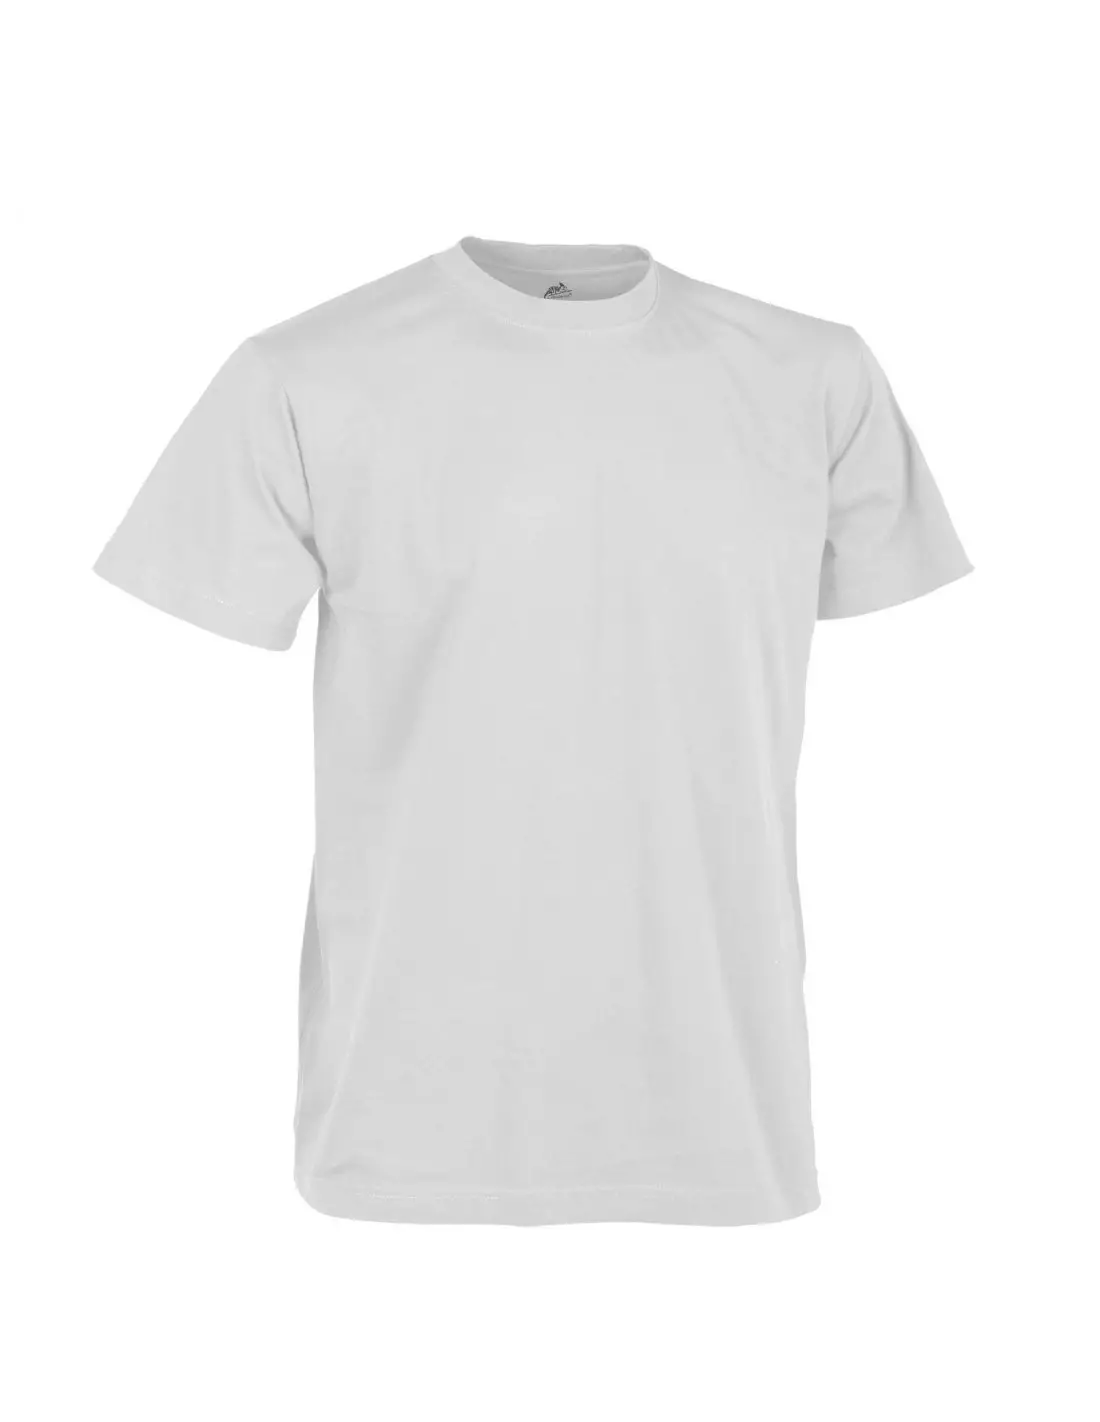 Helikon Travel Advice Mozambique T-Shirt Casual Urban Mens Gym Top Shadow Grey 